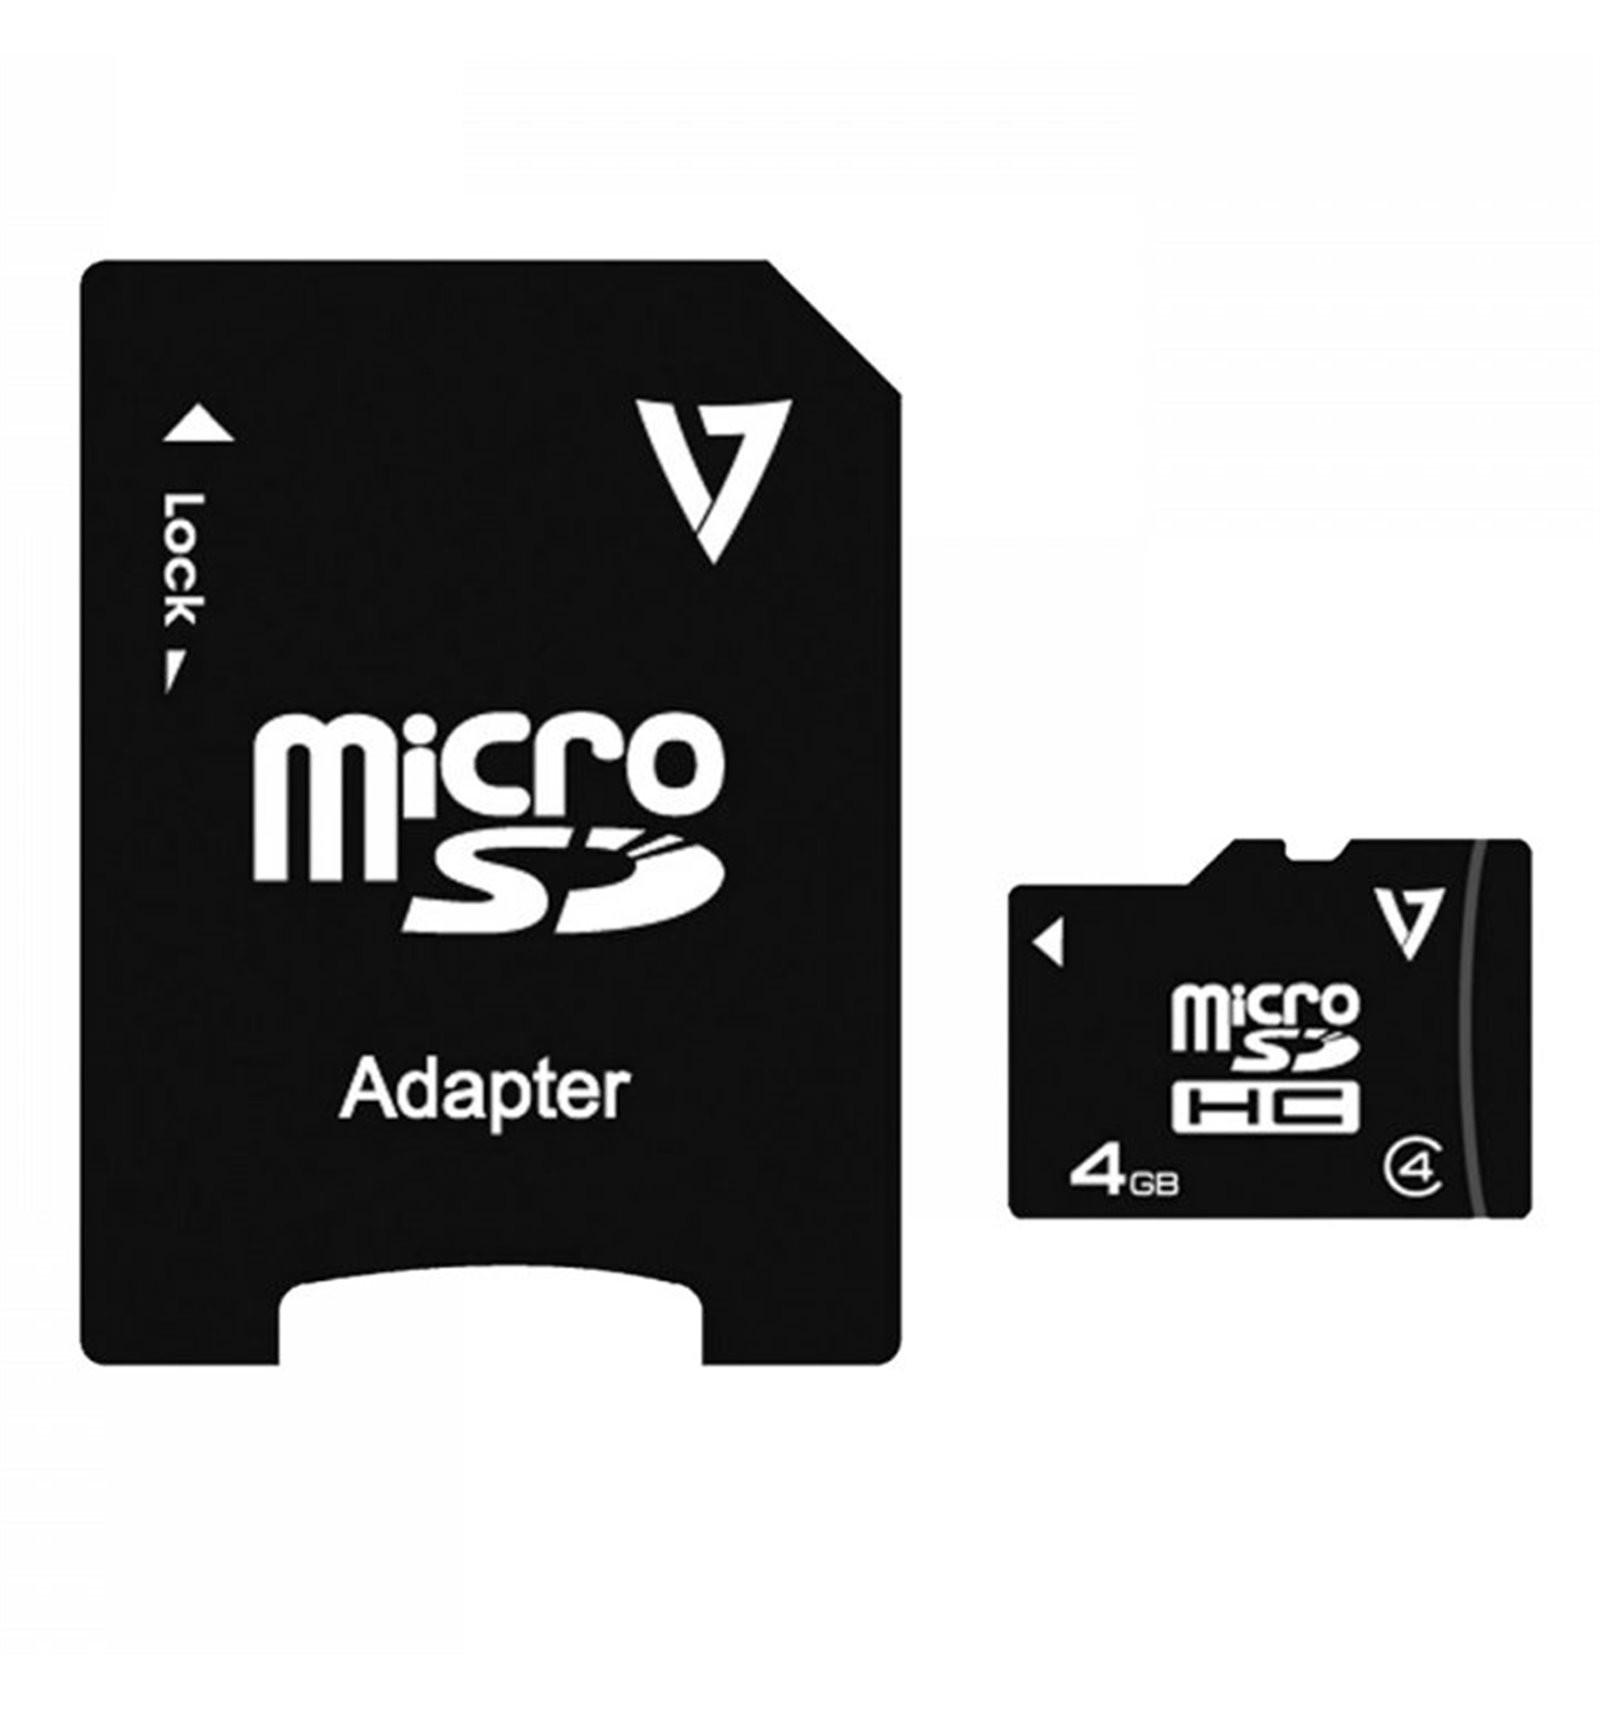 V7  Micro SDHC Class 4 und Adapter (SDHC, 4 GB) 